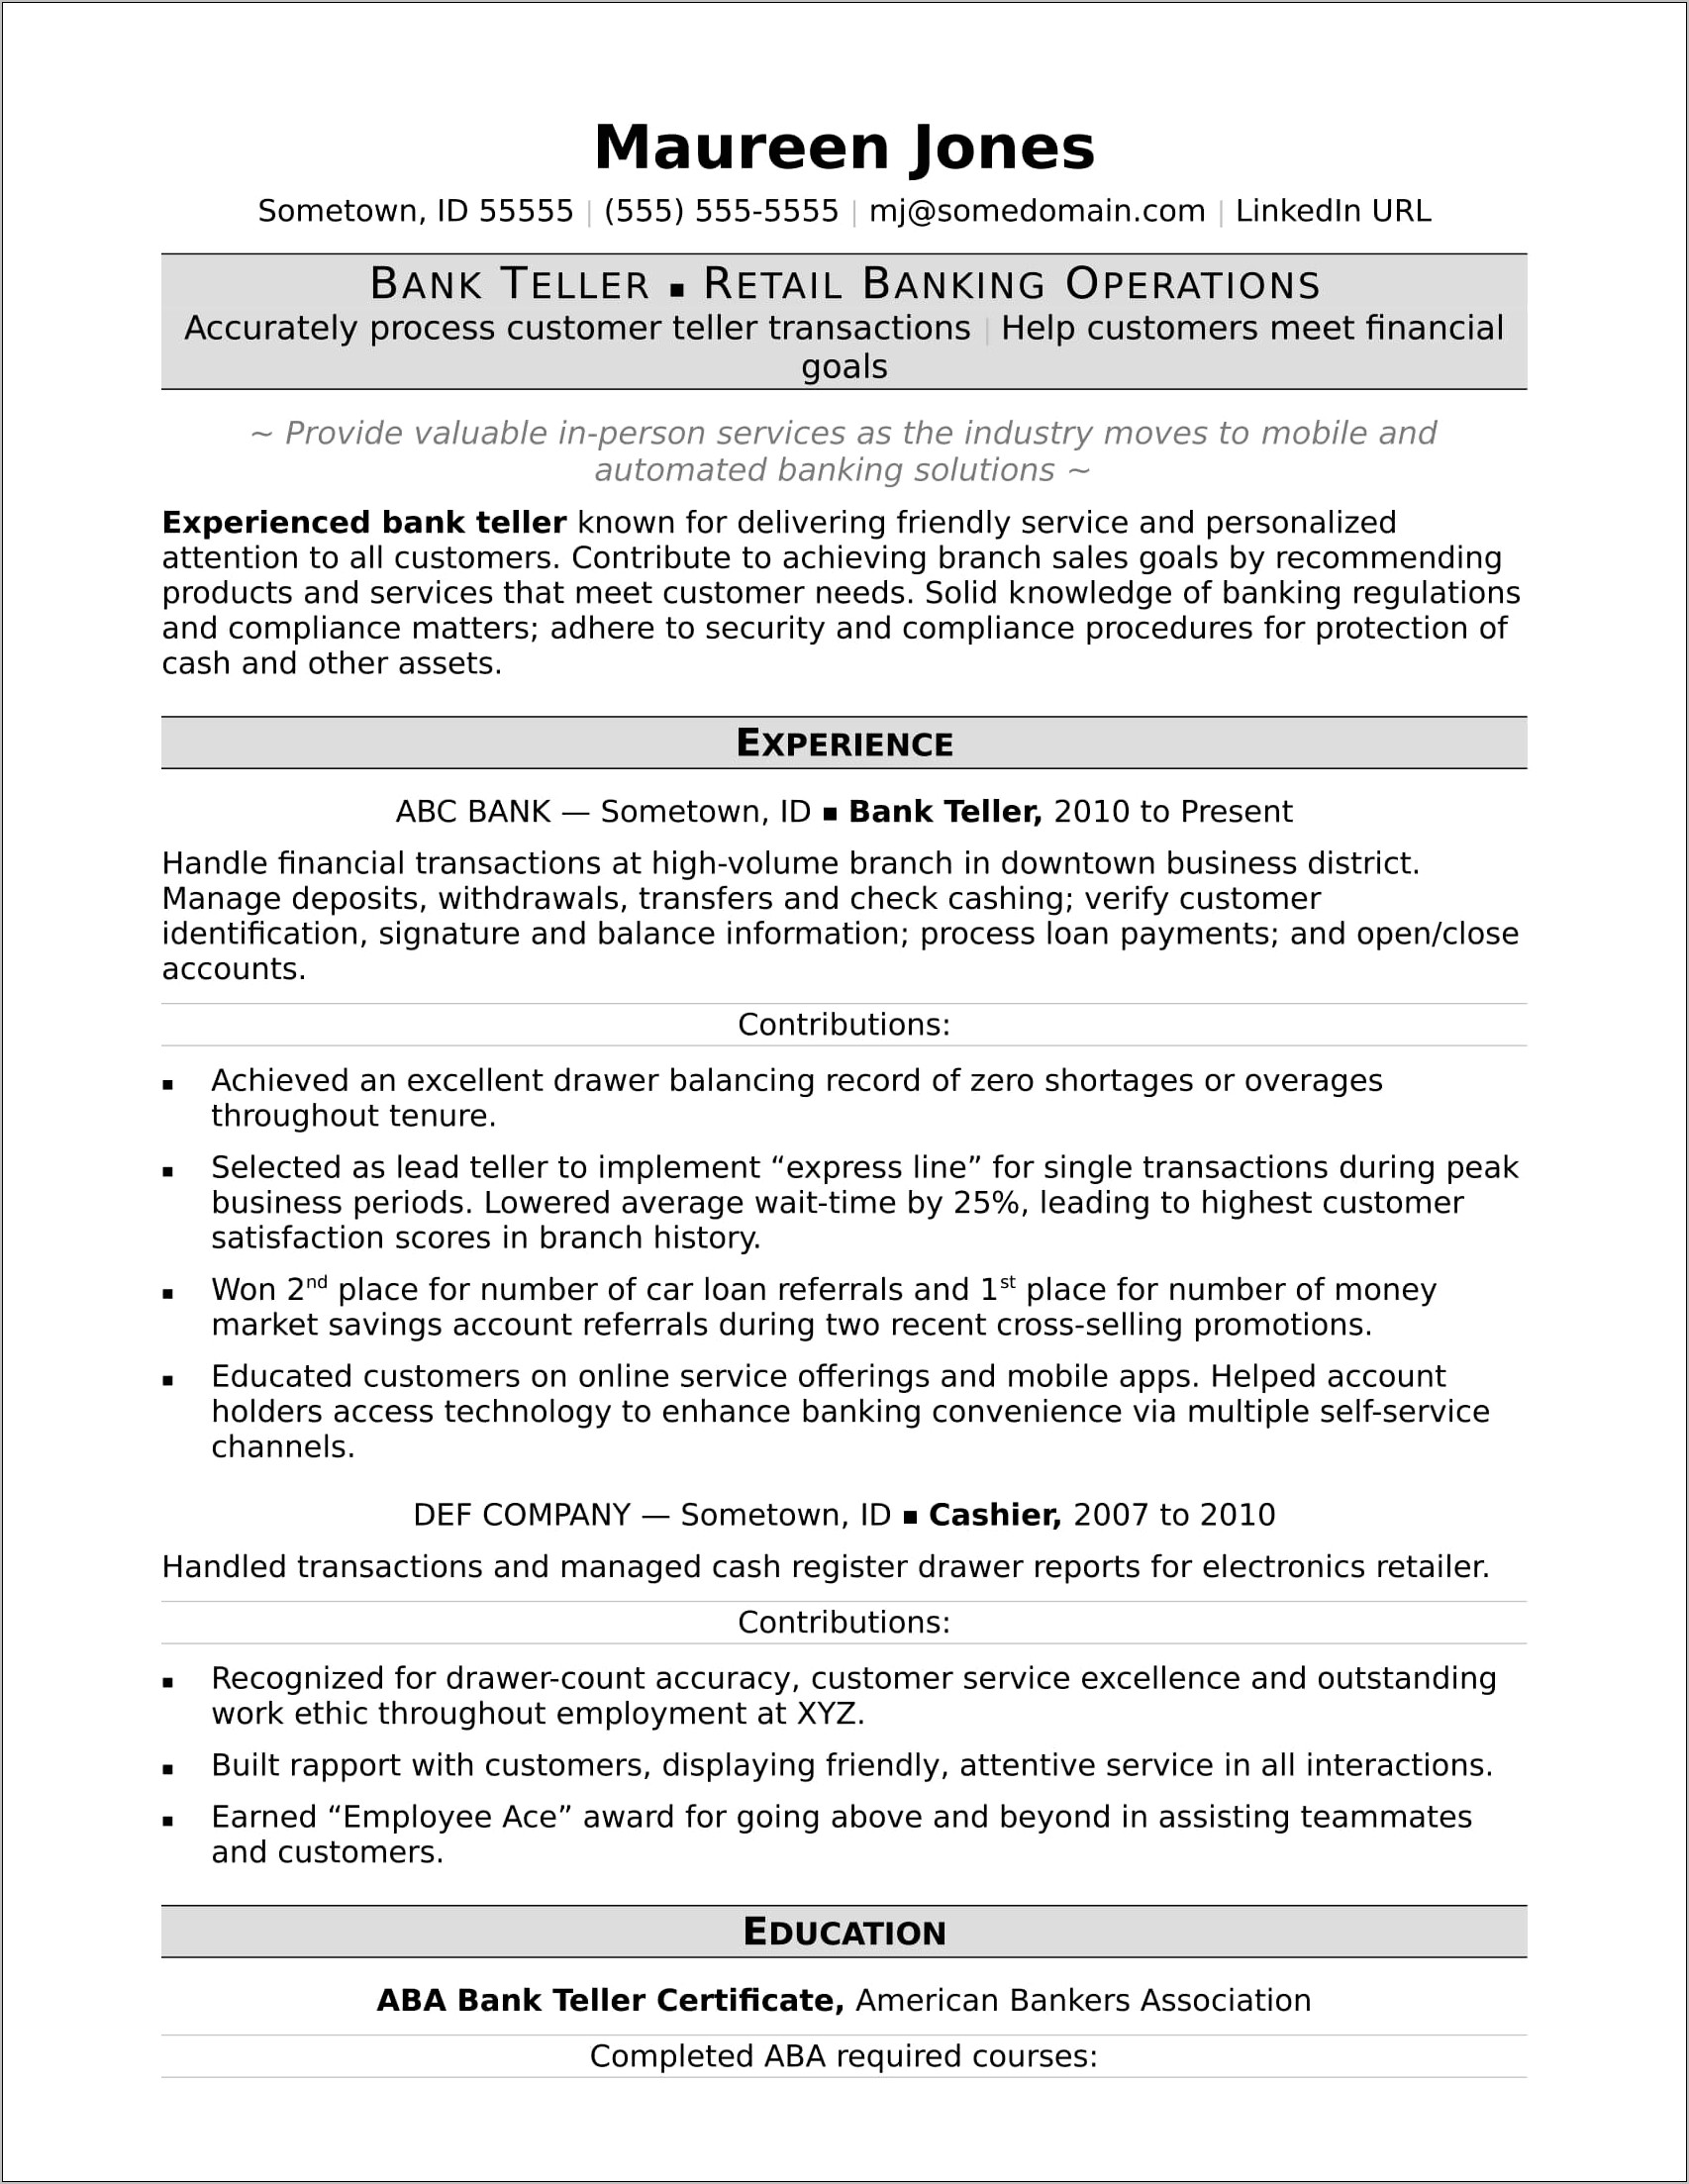 Credit Union Job Descriptions For Resume